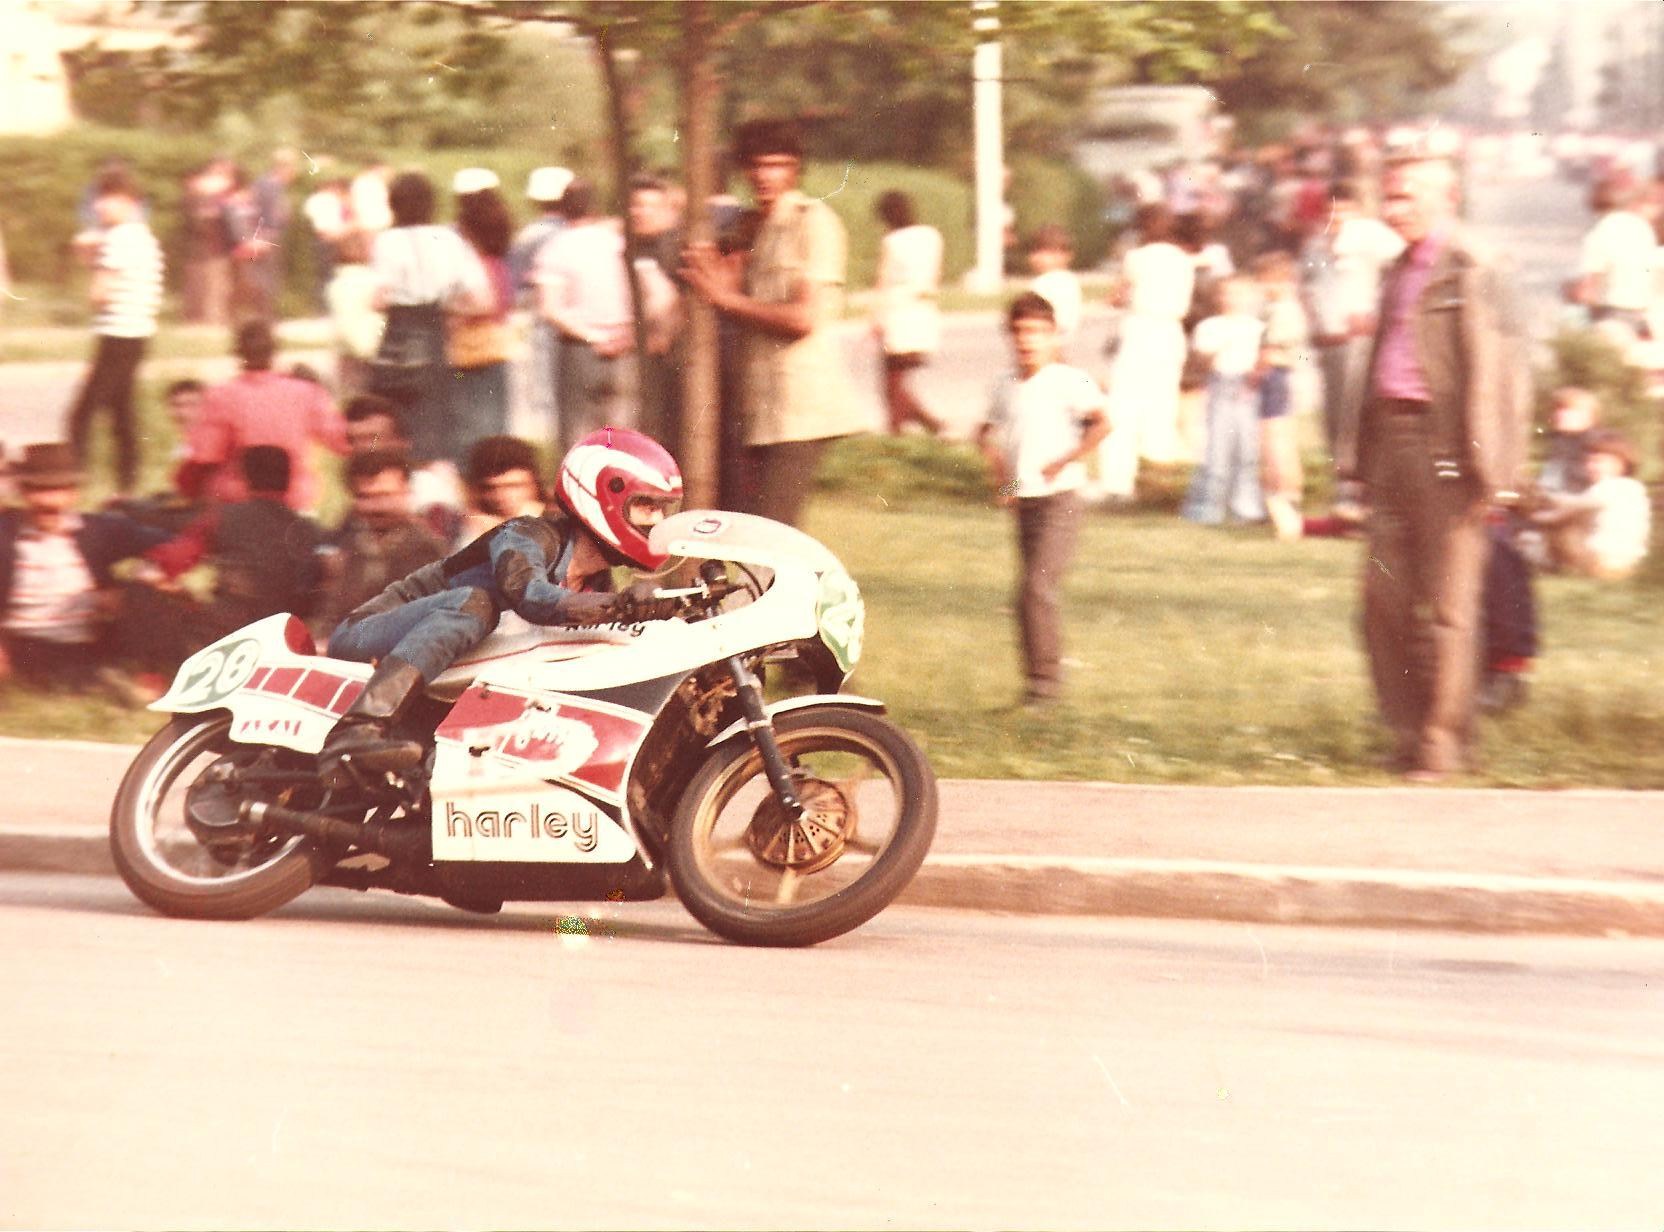 1984 - Reșița street circuit, 250cc - Harley-Davidson engine on Yamaha frame